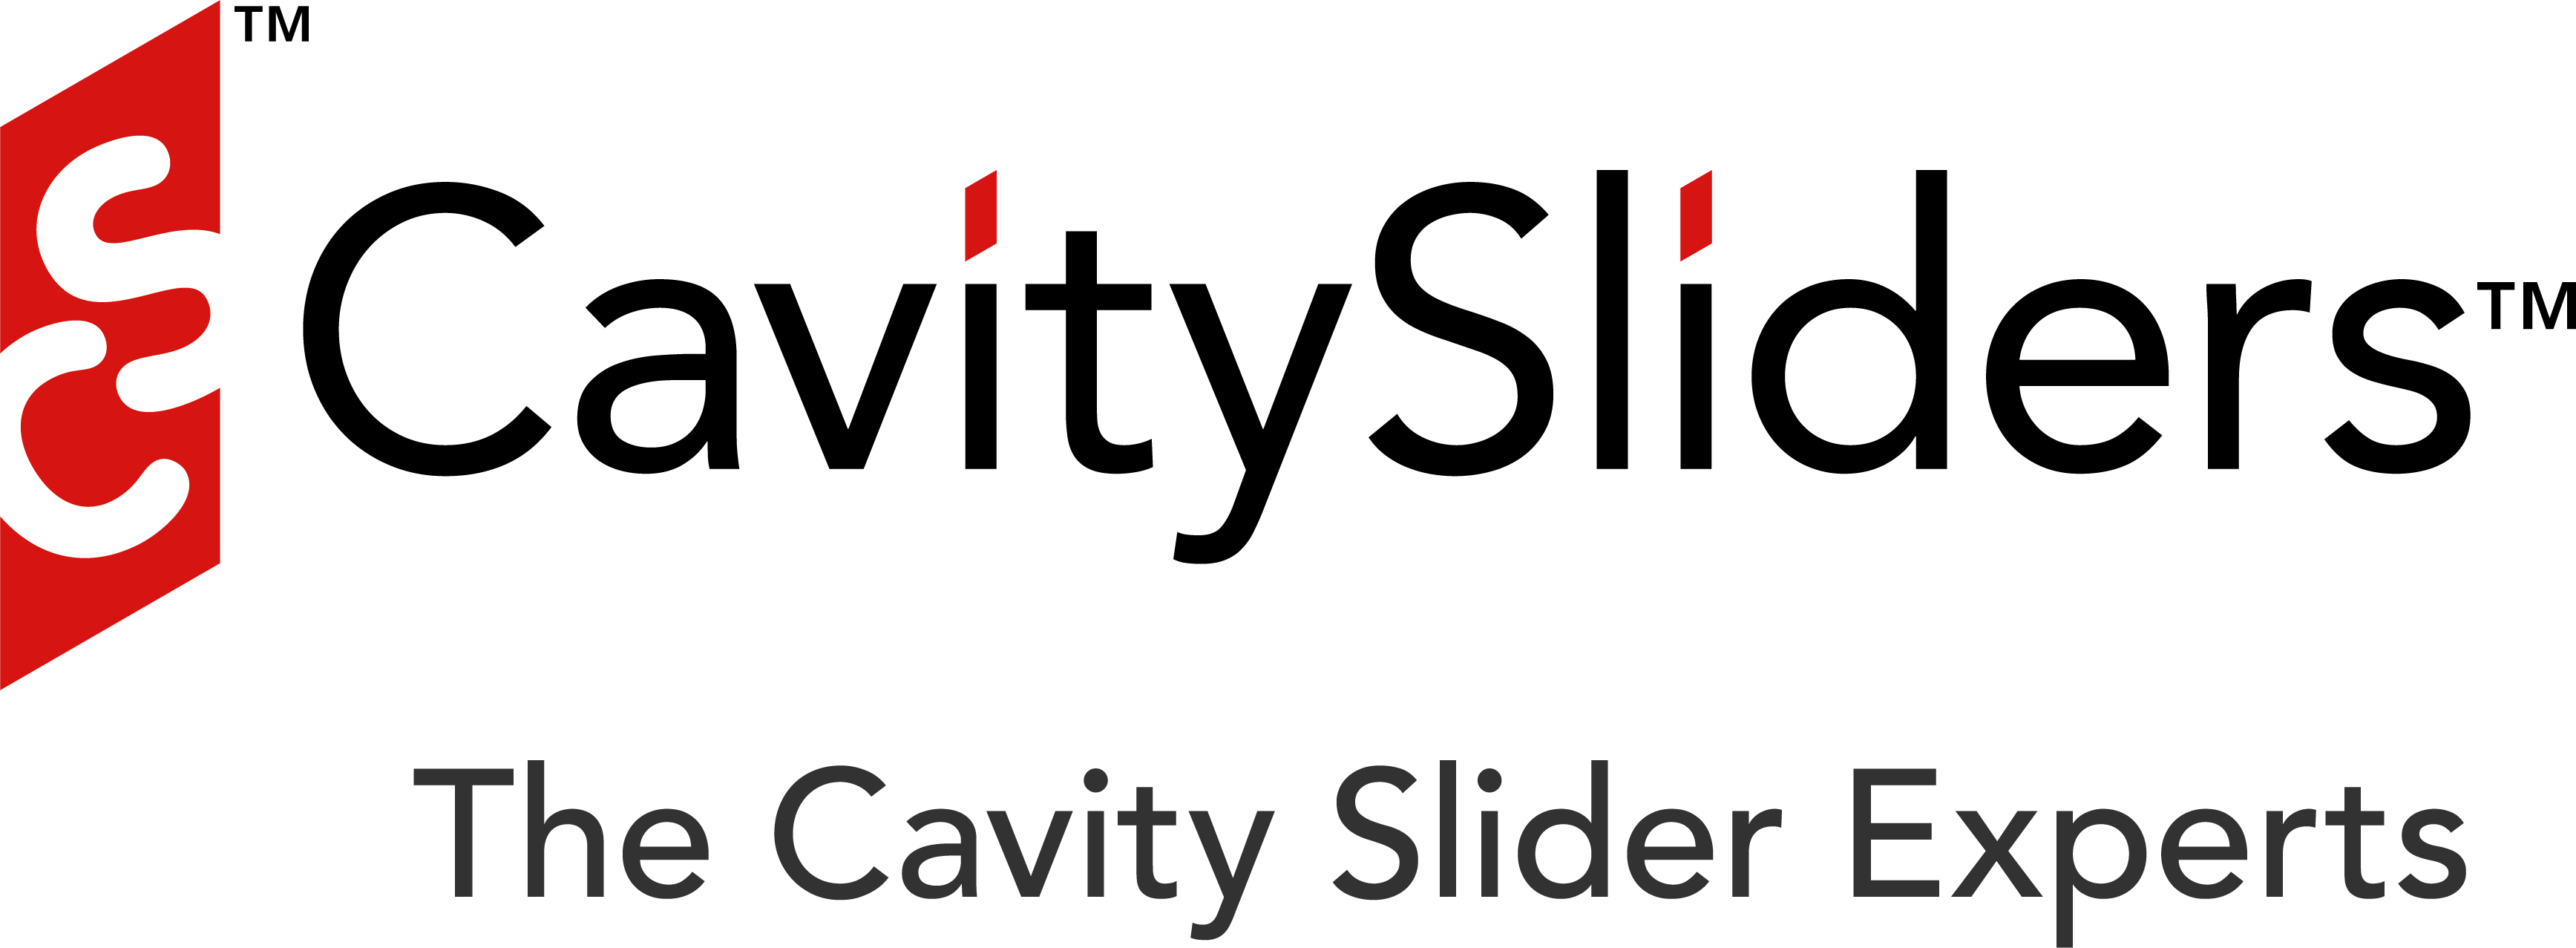 Cavity-Sliders-AU-with-tag.jpg